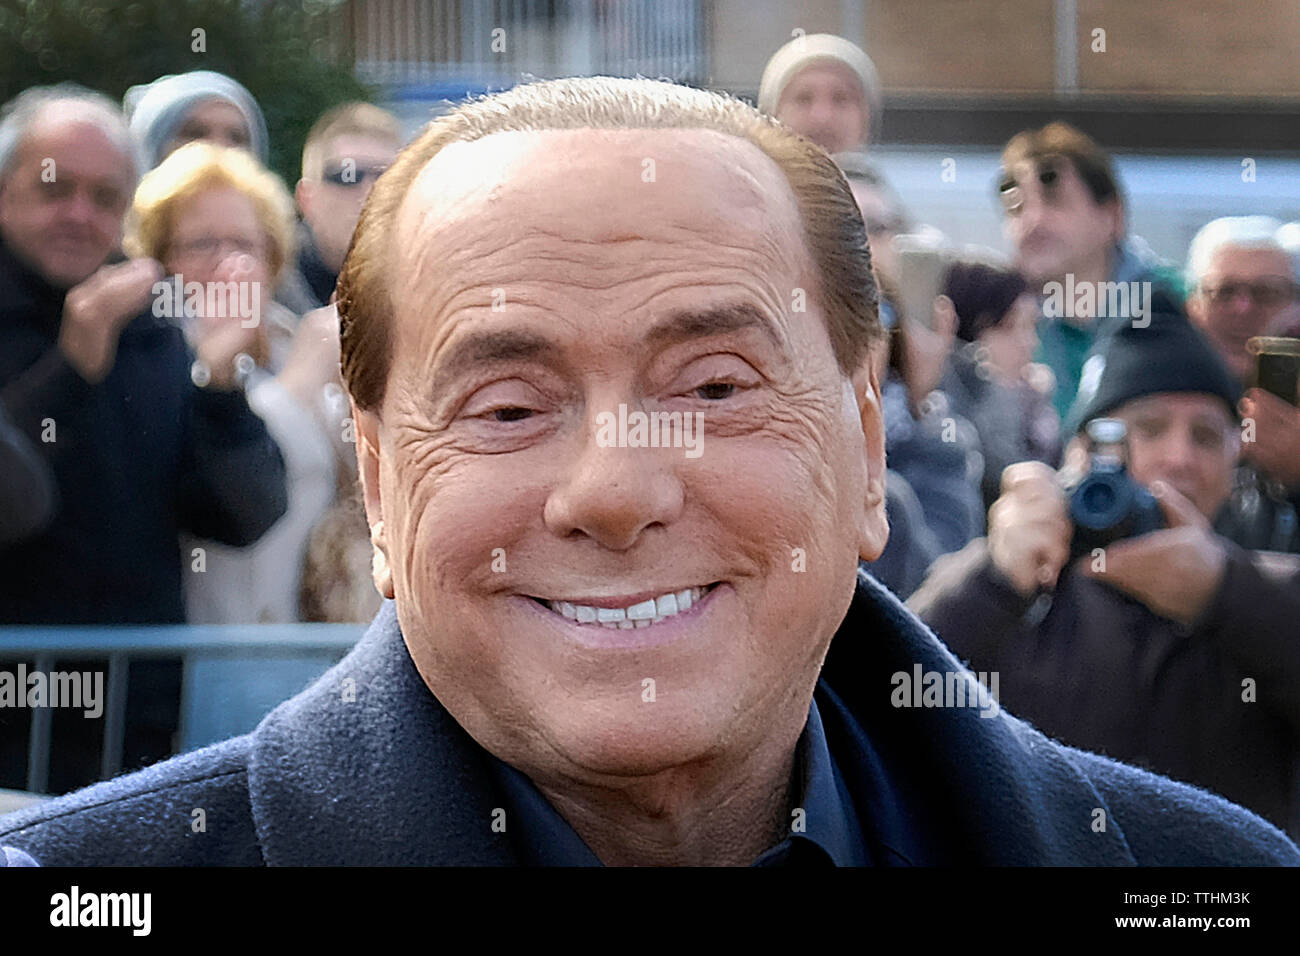 Italy, Silvio Berlusconi visiting L'Aquila Photo © Danilo  Balducci/Sintesi/Alamy Stock Photo Stock Photo - Alamy